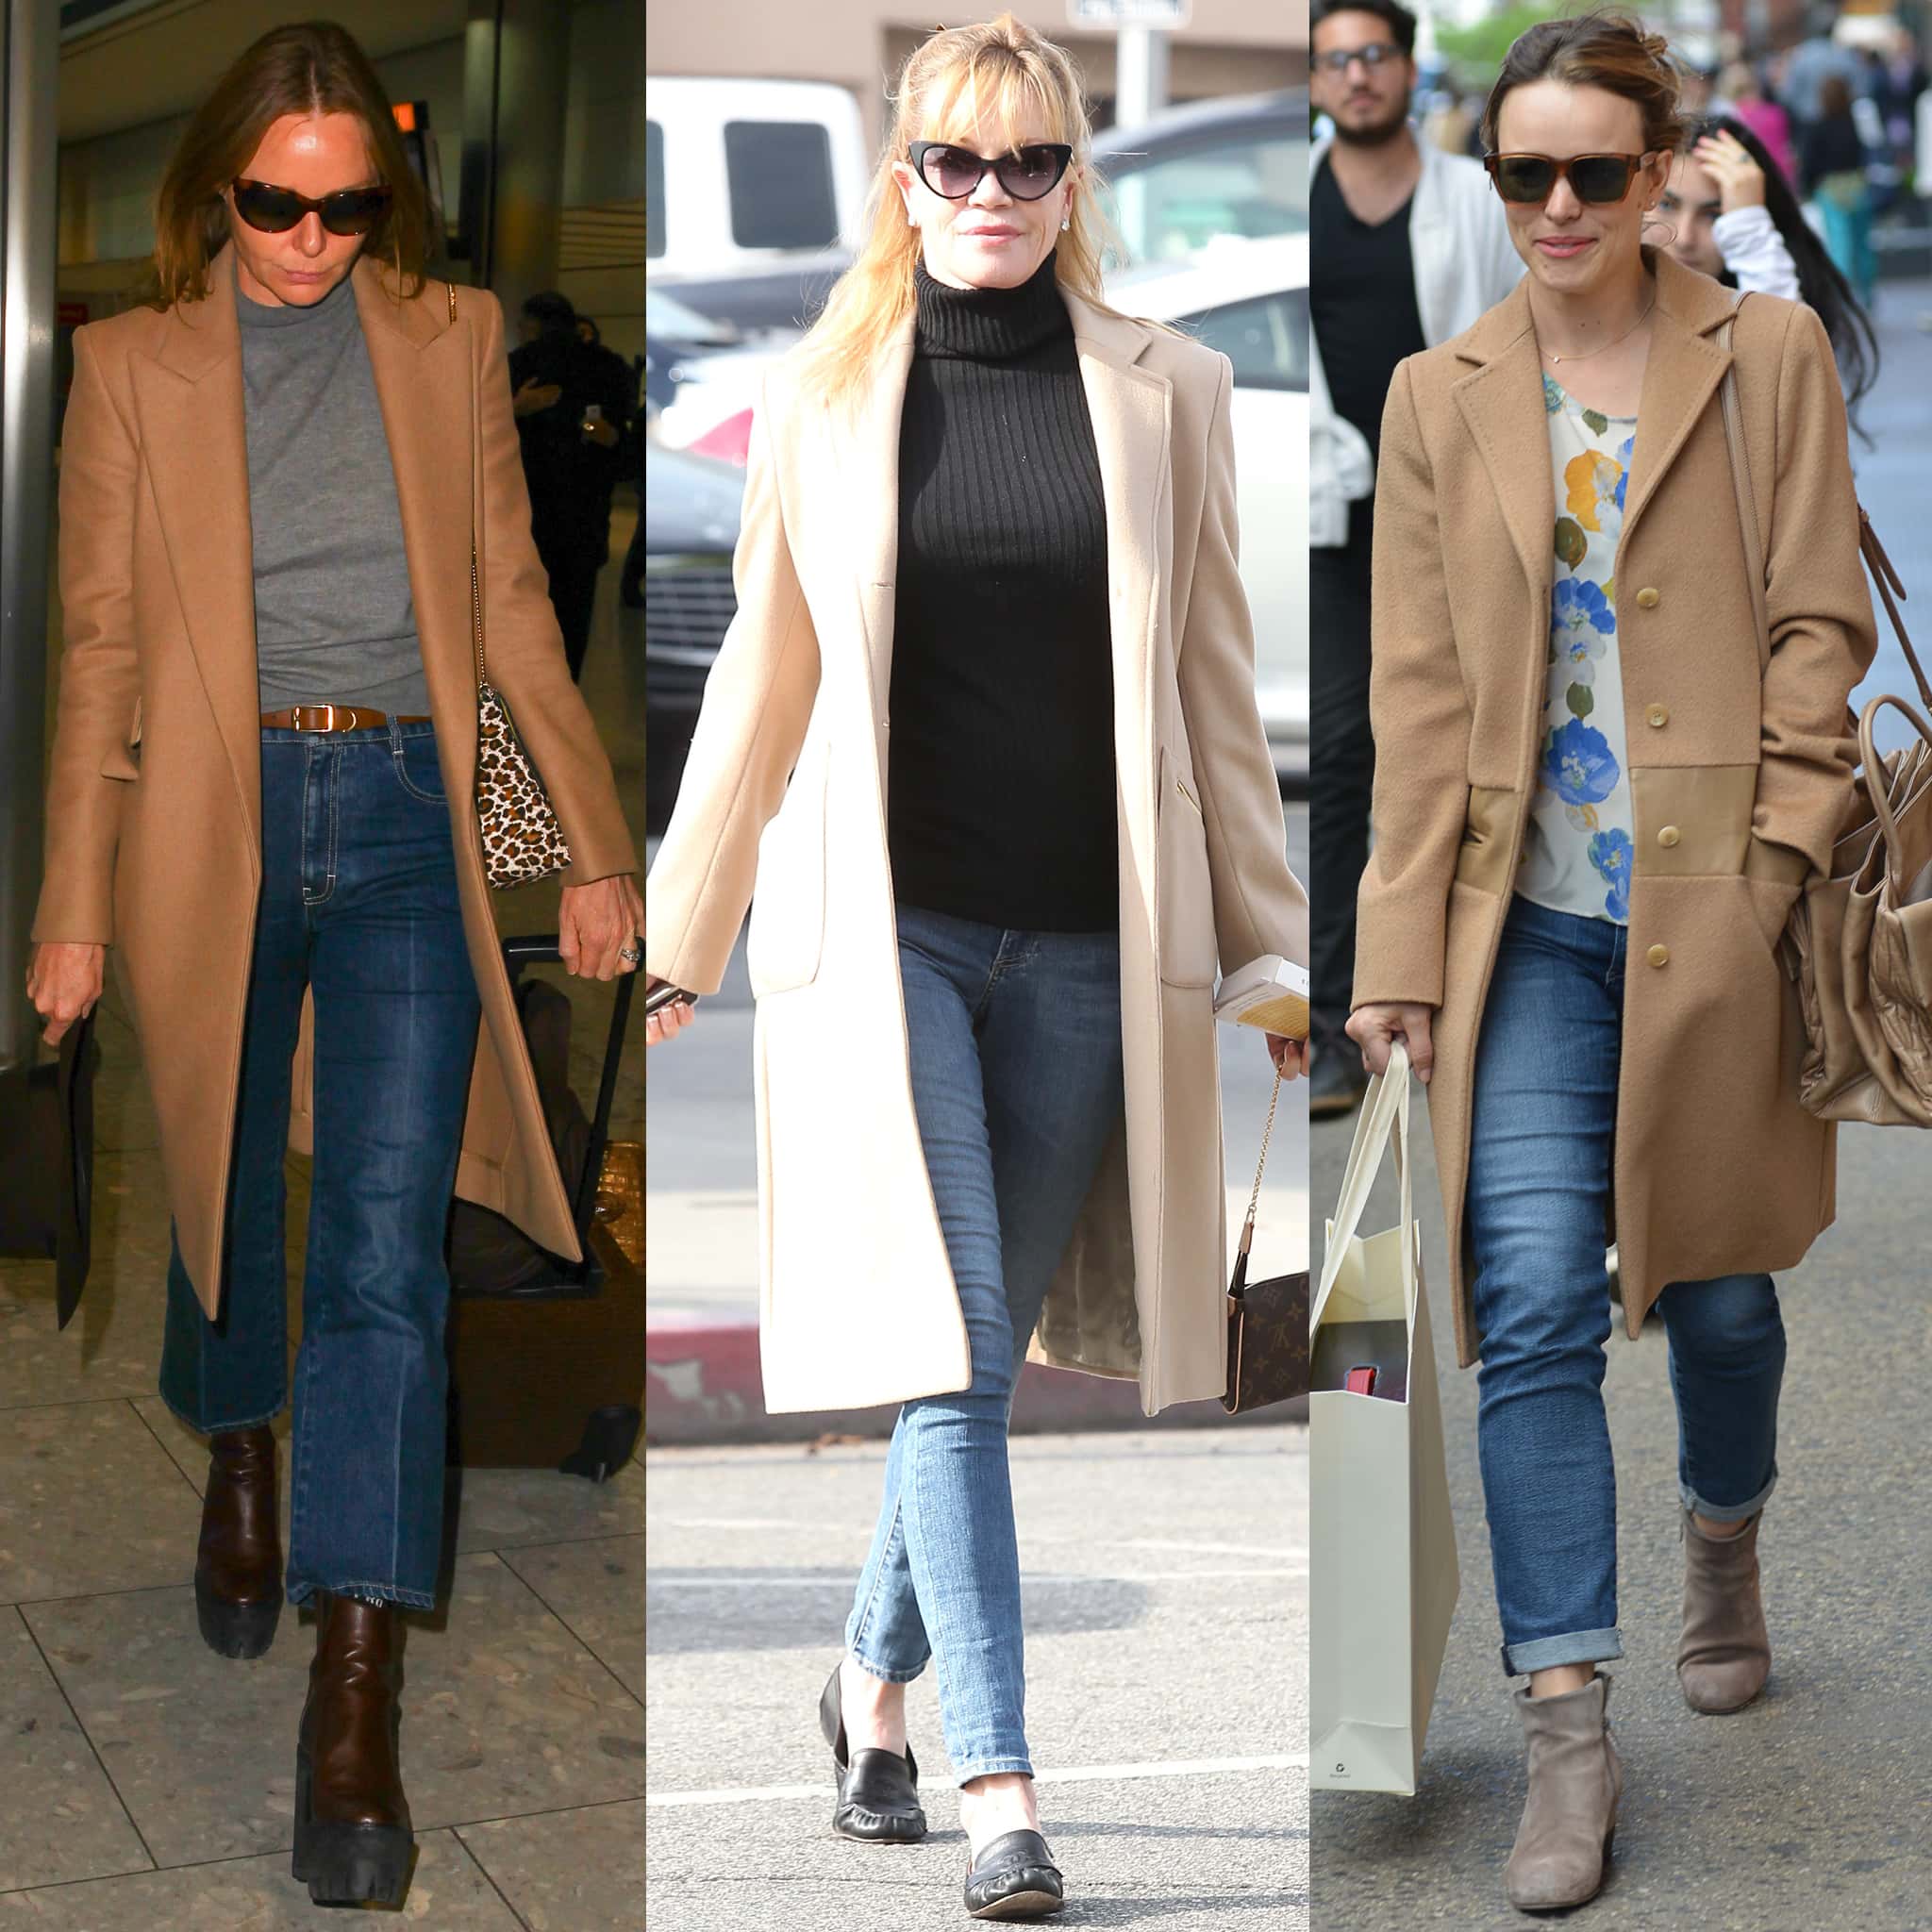 Stella McCartney, Melanie Griffith, and Rachel McAdams pair their chic camel coats with classic denim jeans